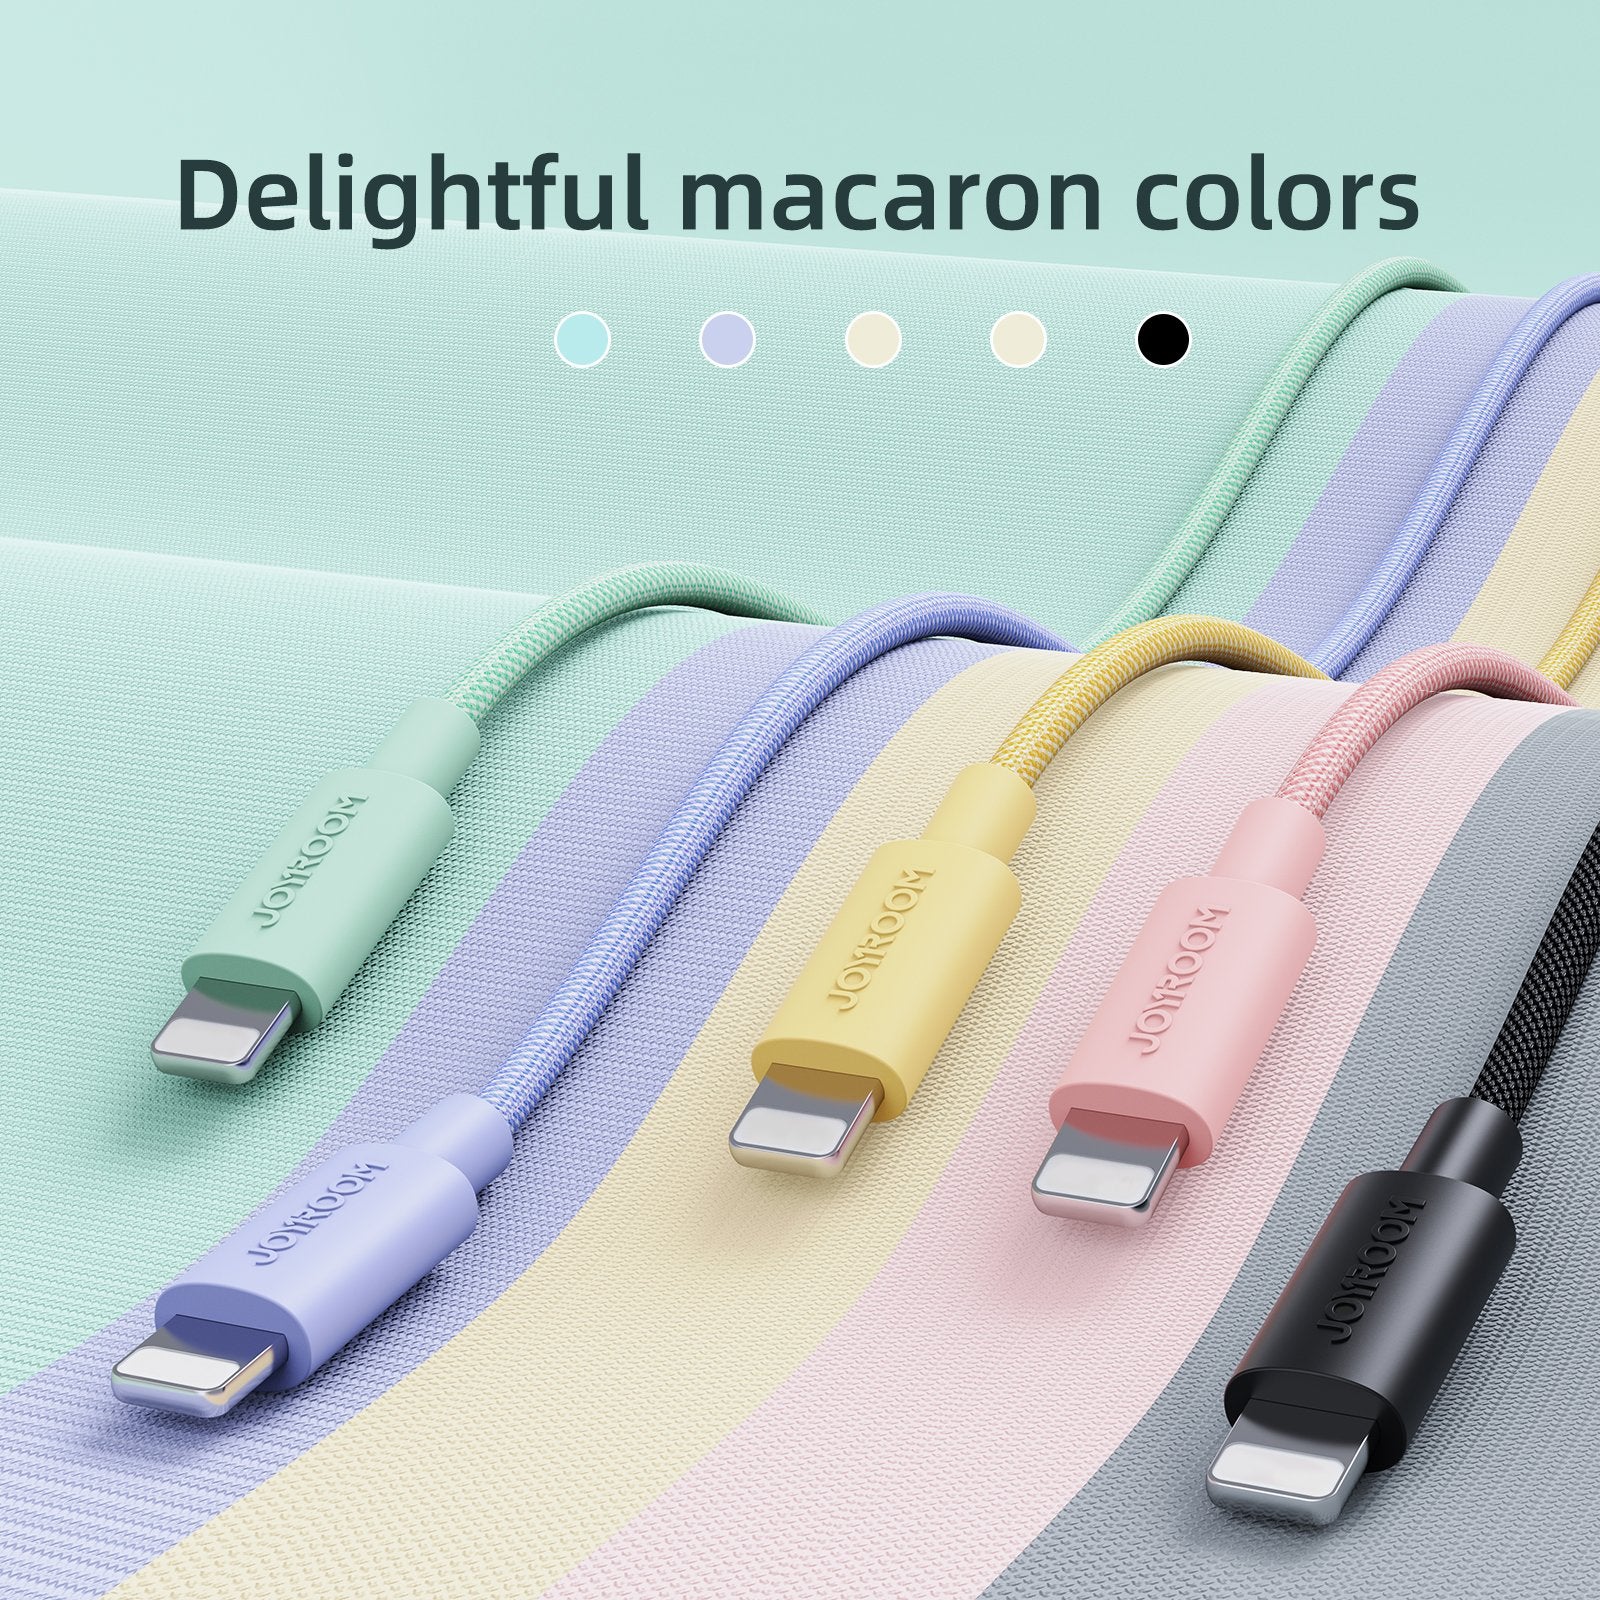 Delightful macaron colors